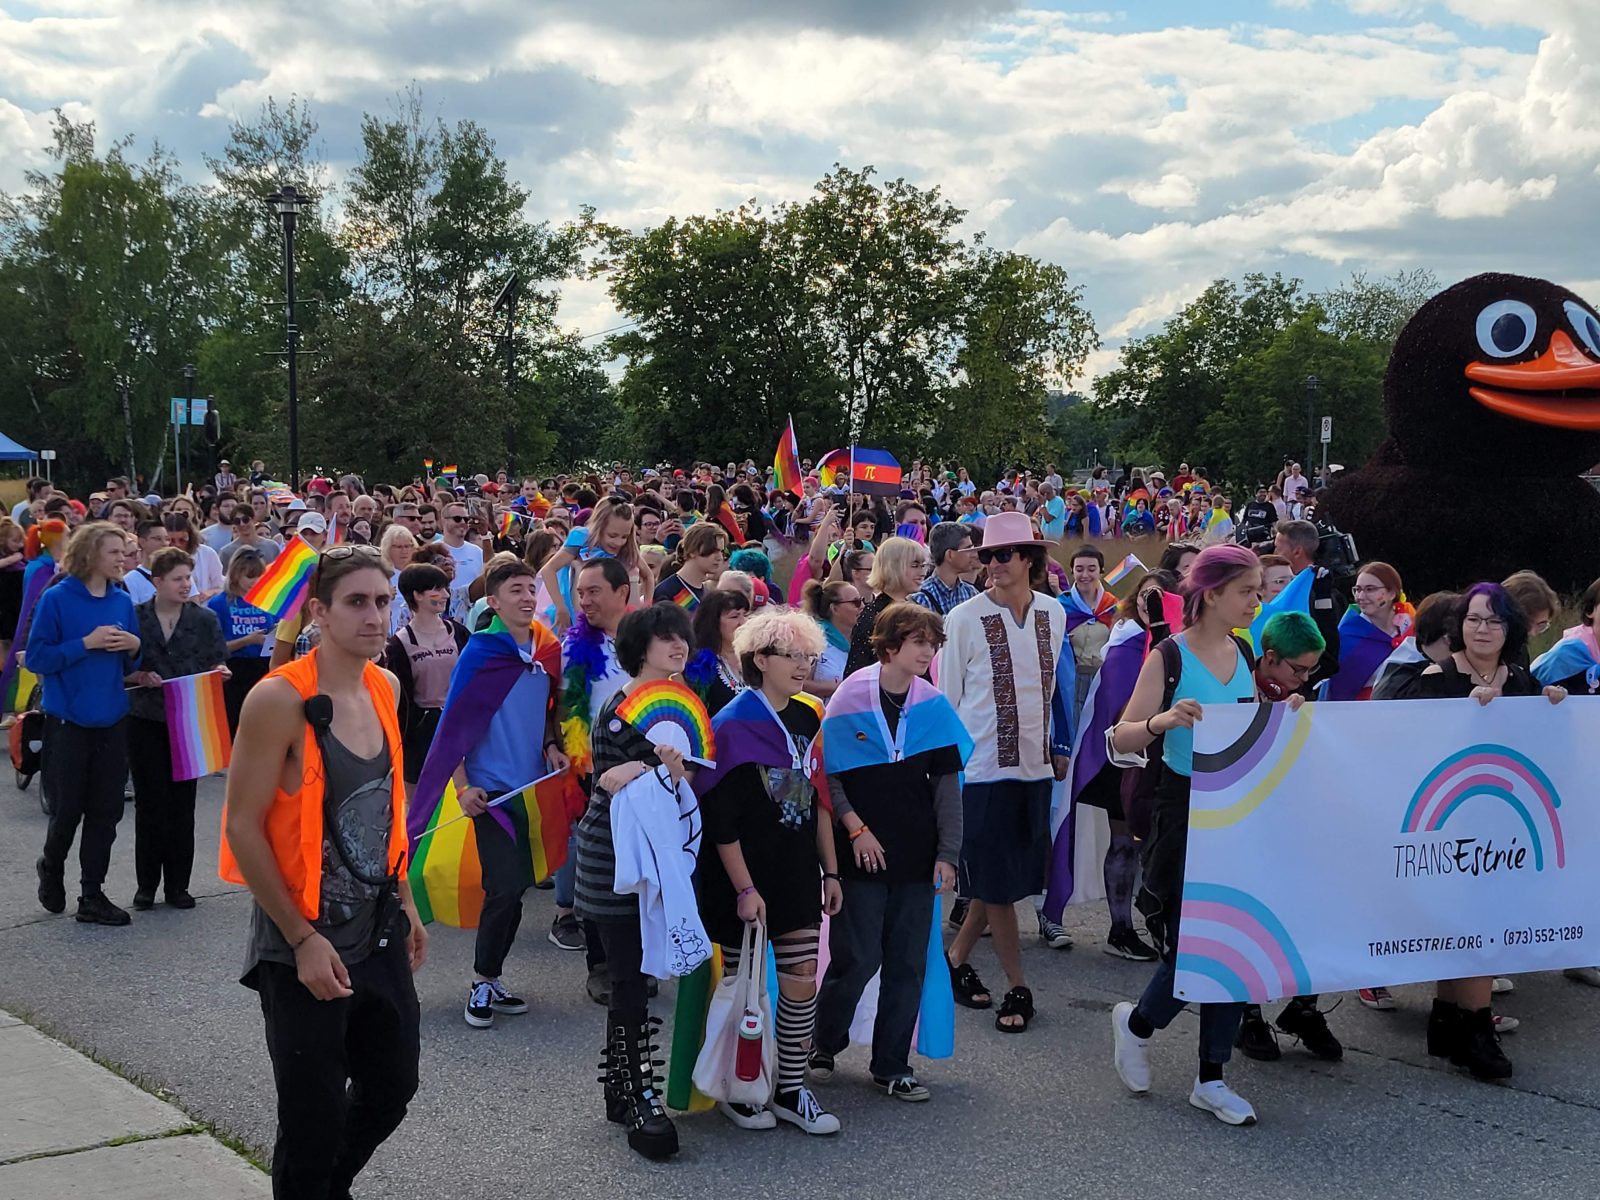 Fière la Fête, Sherbrooke’s Pride festivities, back for an 11th edition